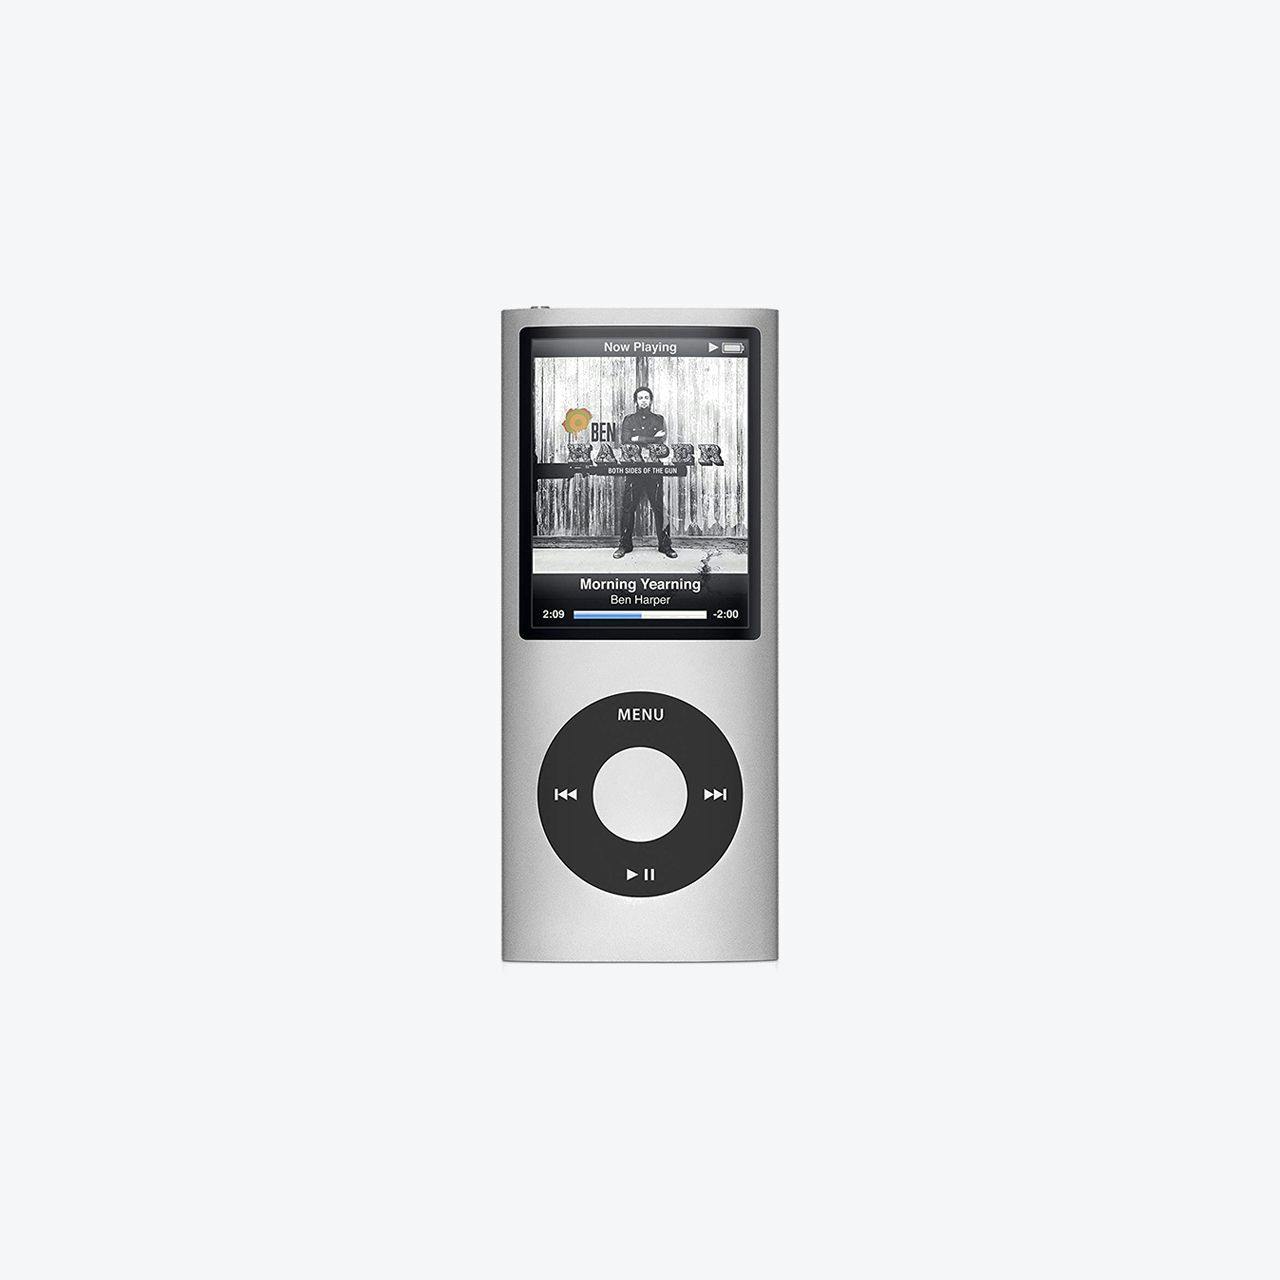 Image of a 4th generation iPod Nano.